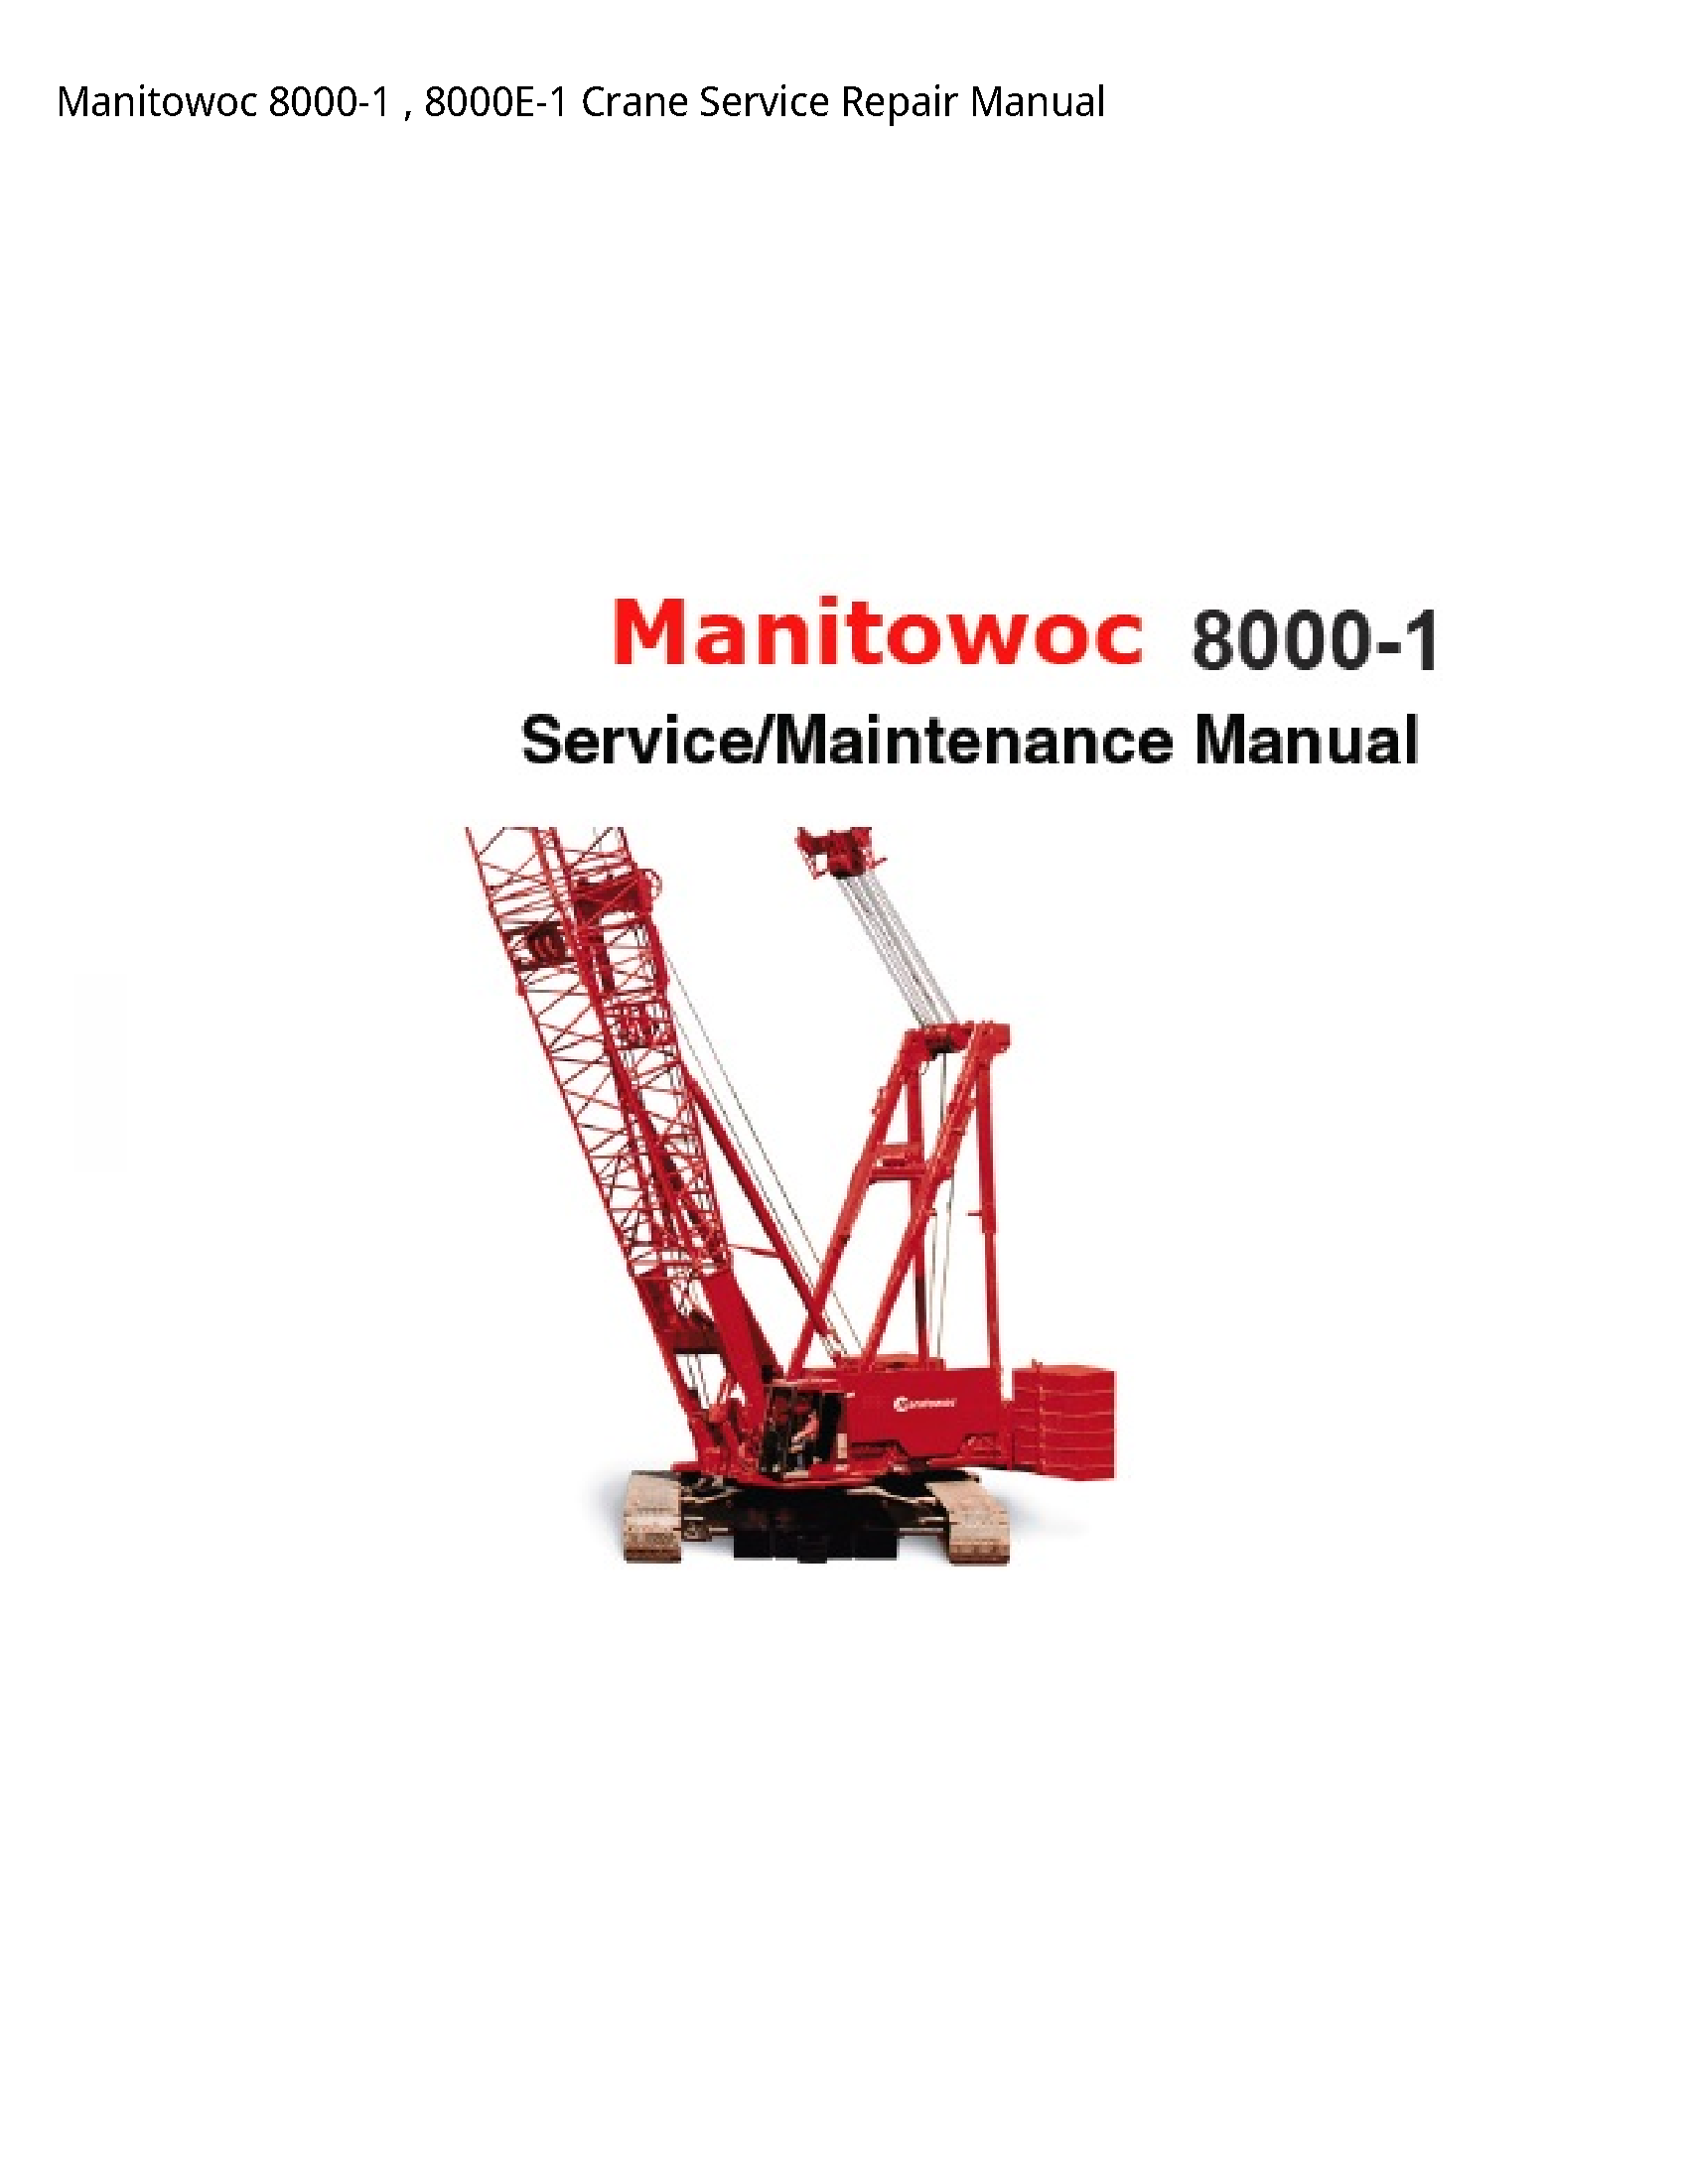 Manitowoc 8000-1 Crane manual